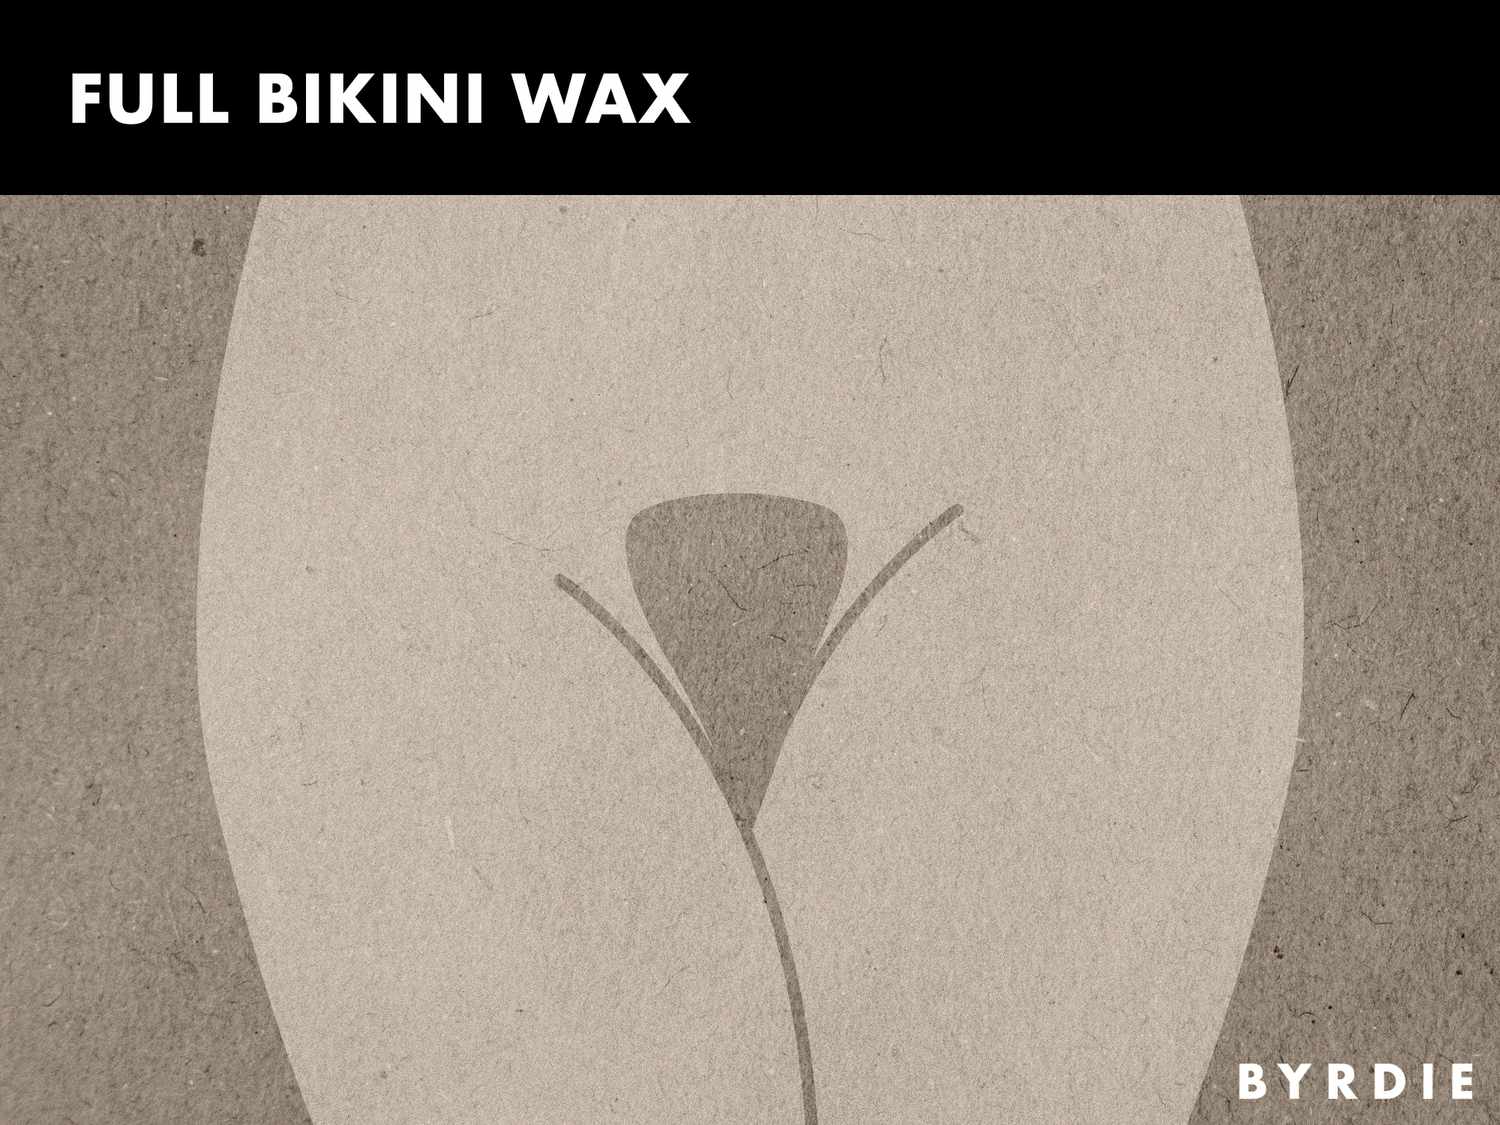 bradley j anderson recommends Bikini Wax Style Photos